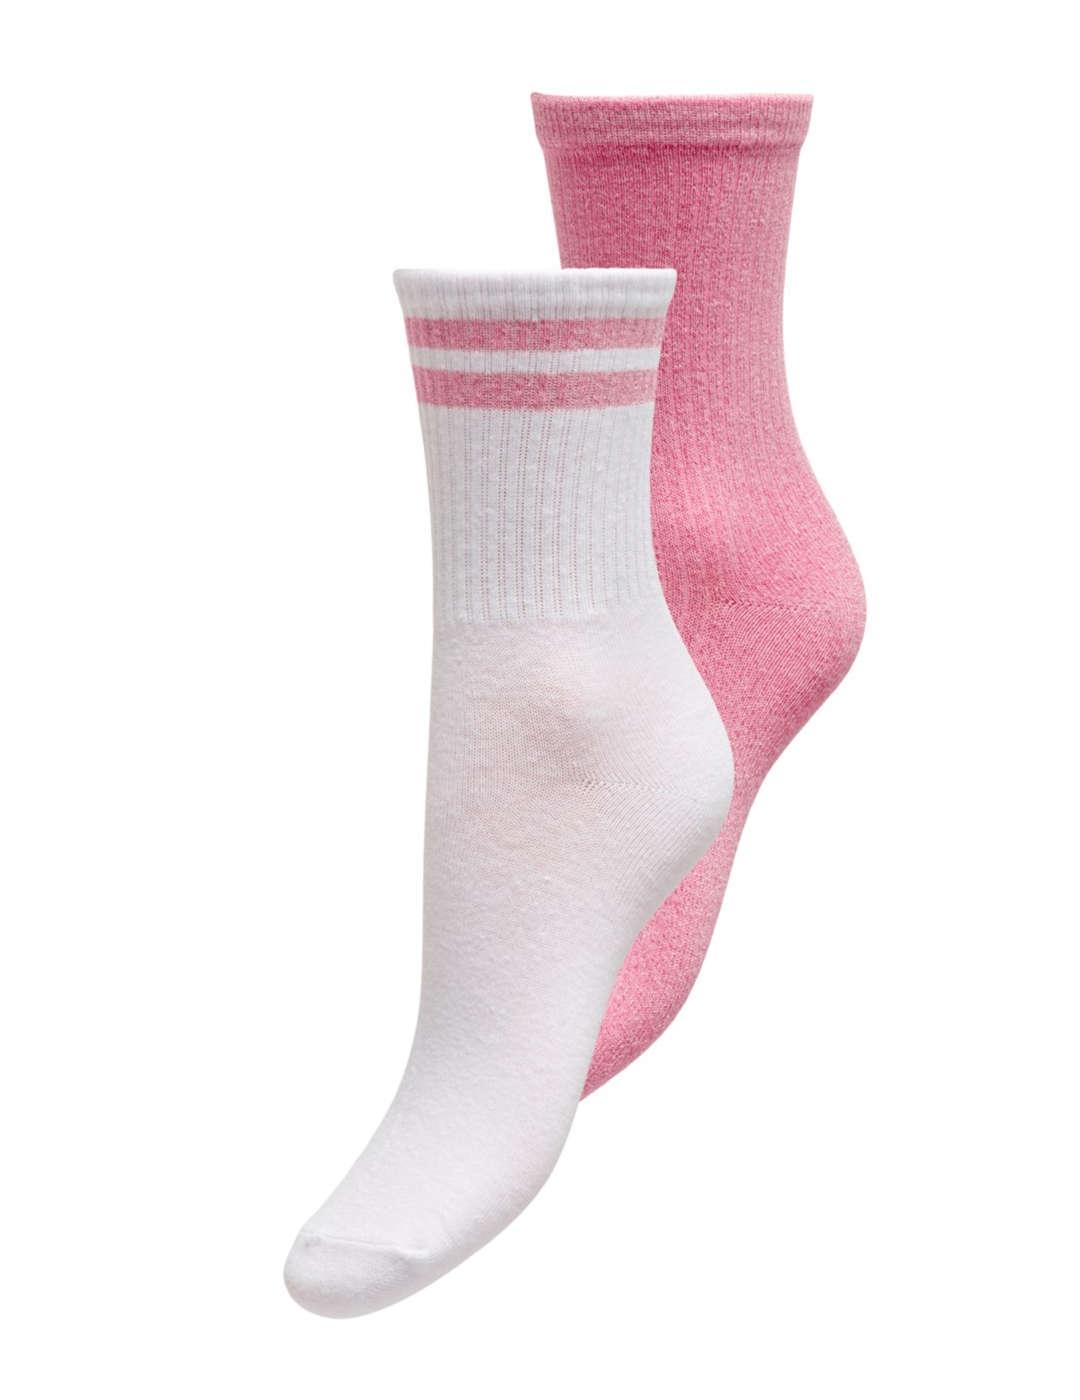 Calcetines altos Only Tanja pack2 rosa y blanco para muj